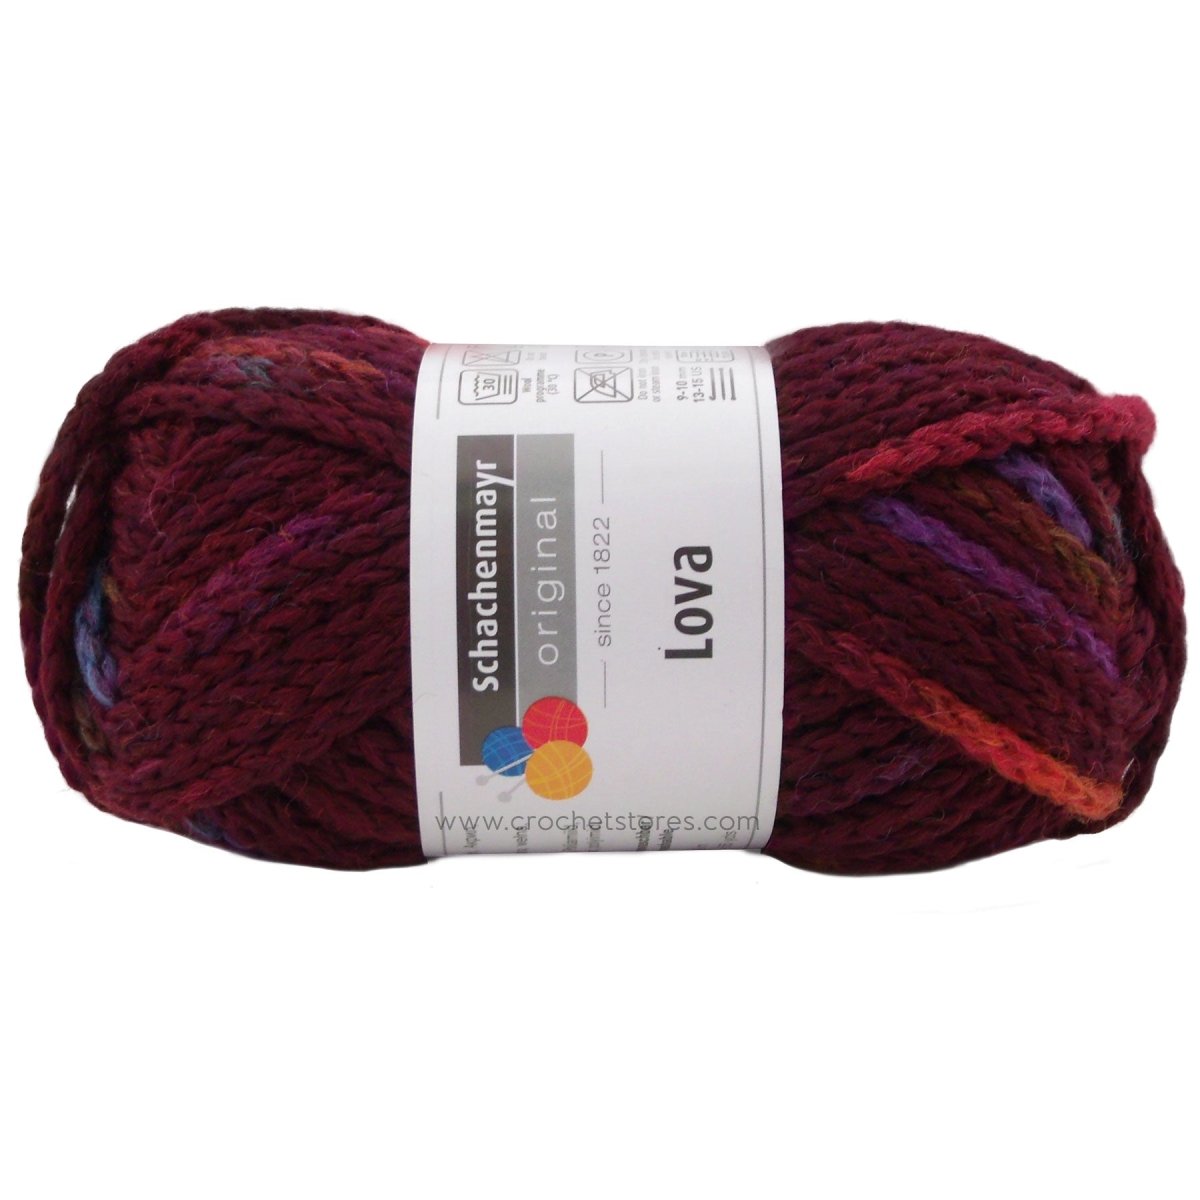 LOVA - Crochetstores9807543-904053859043076